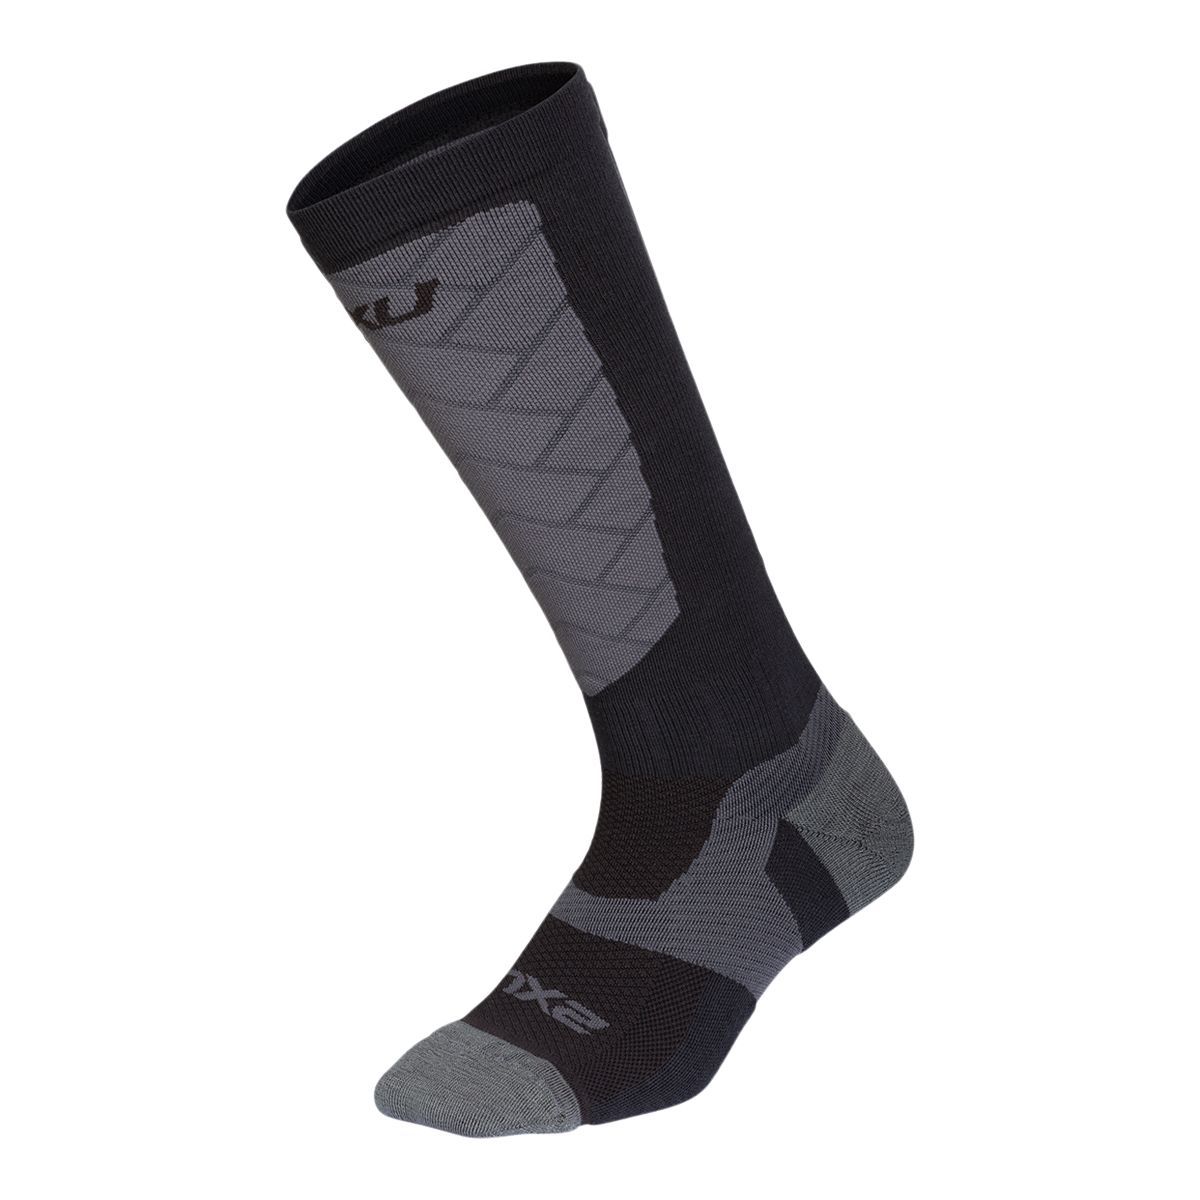 2XU Men's Vectr Warm Compression Socks  Merino Wool Blend